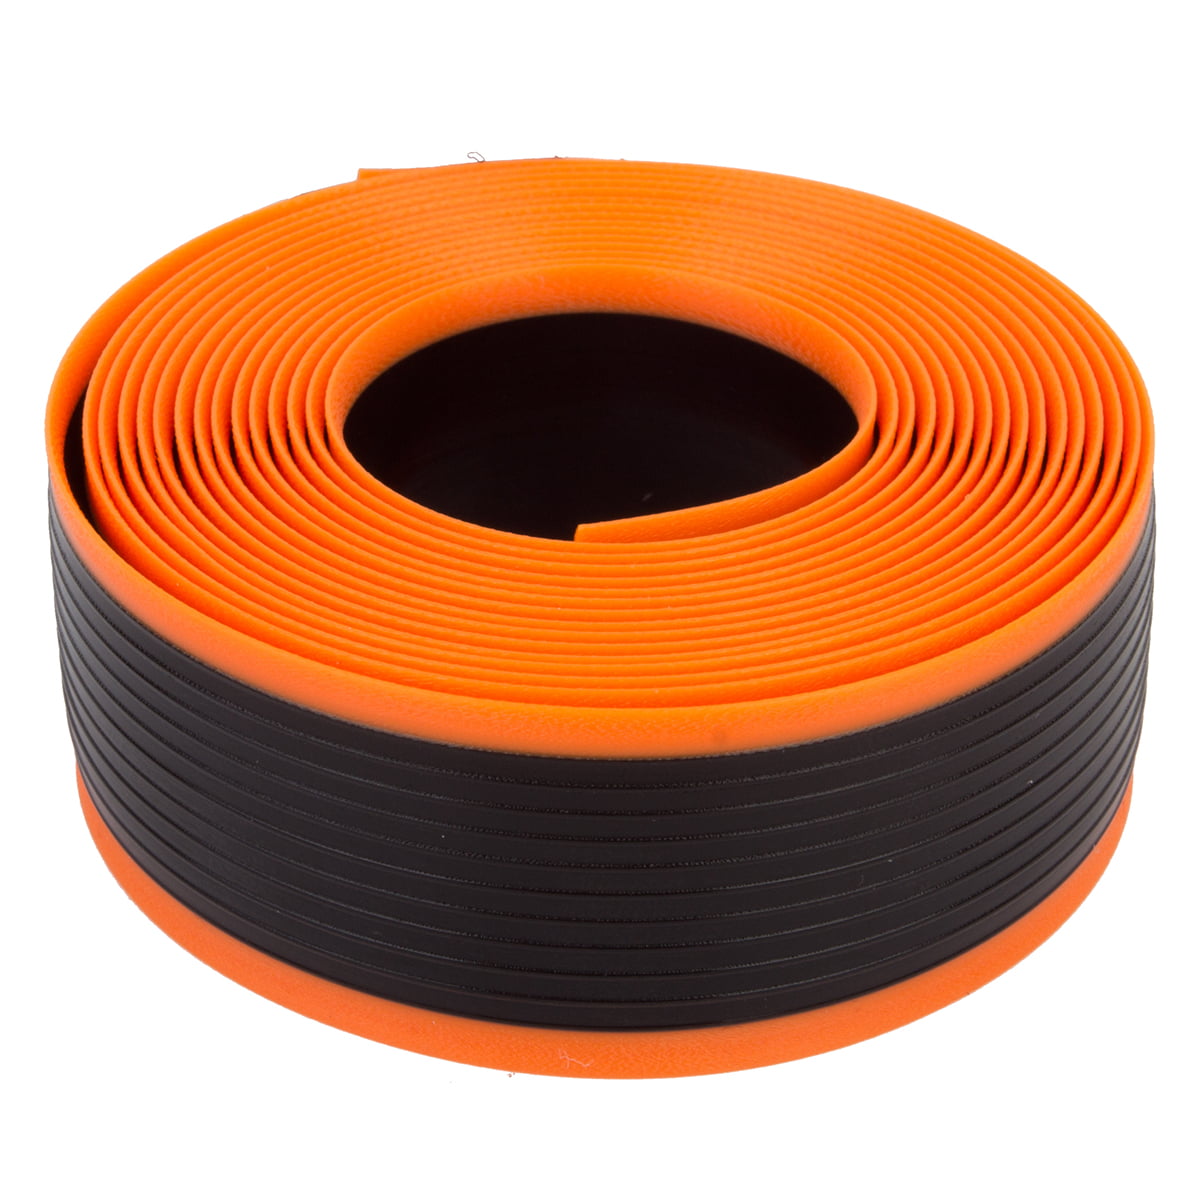 Tuffy Tire Liner 27x1 Orange 700x20-25 Mr 